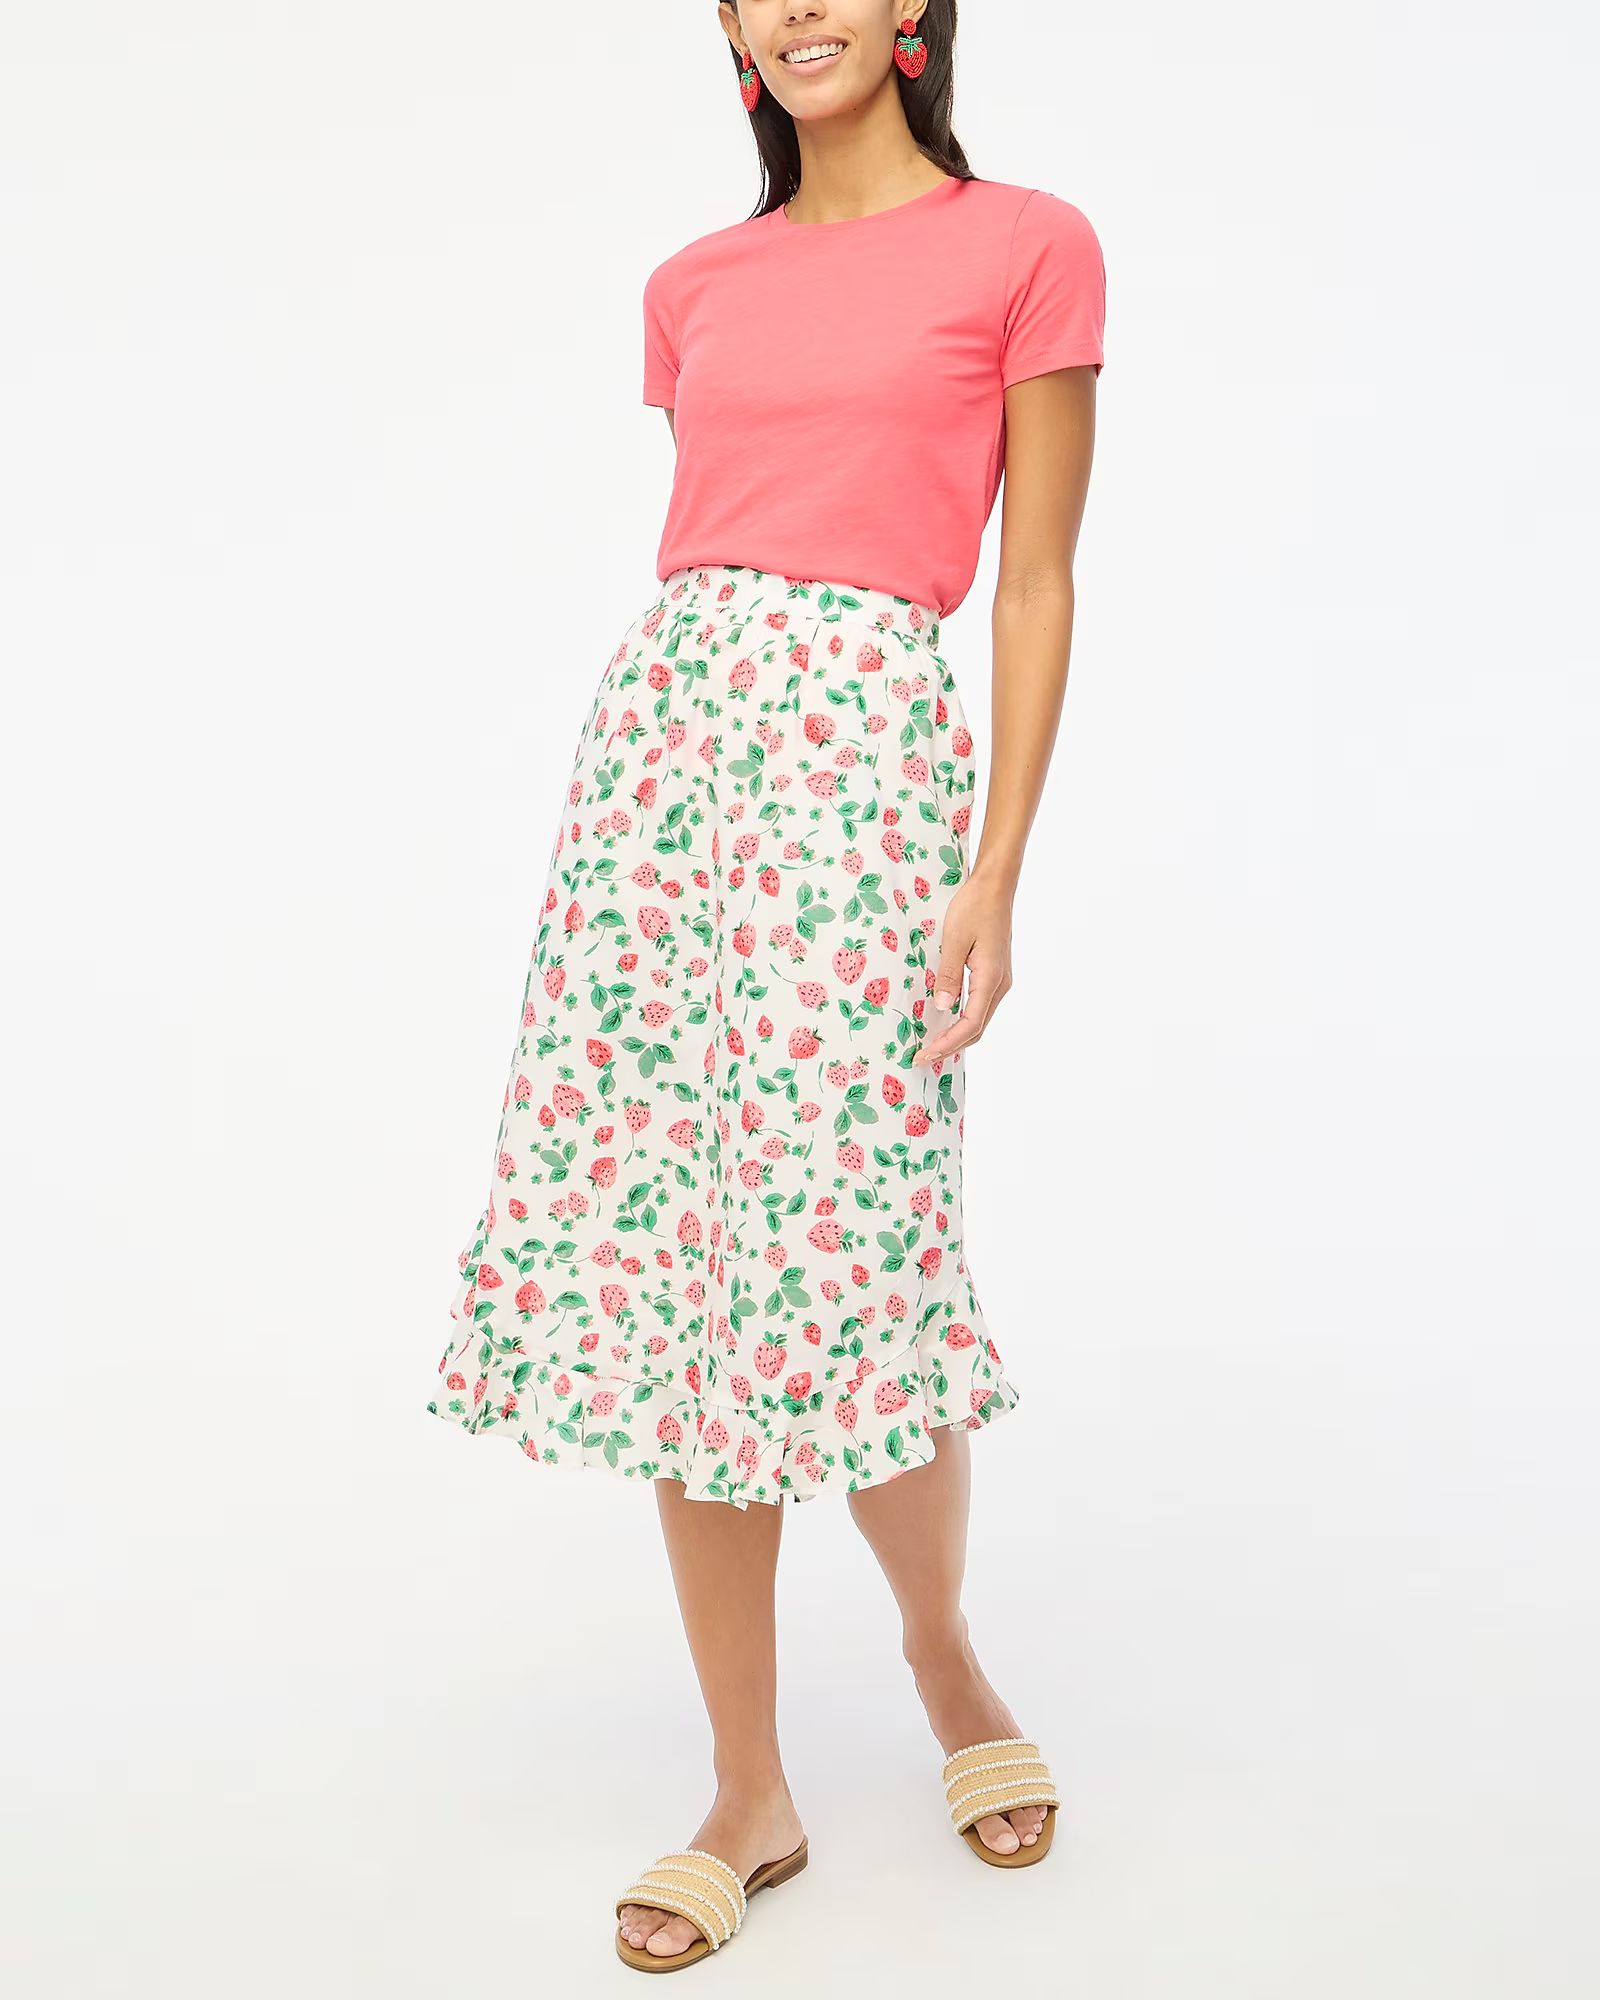 Midi skirt with flounce hem | J.Crew Factory